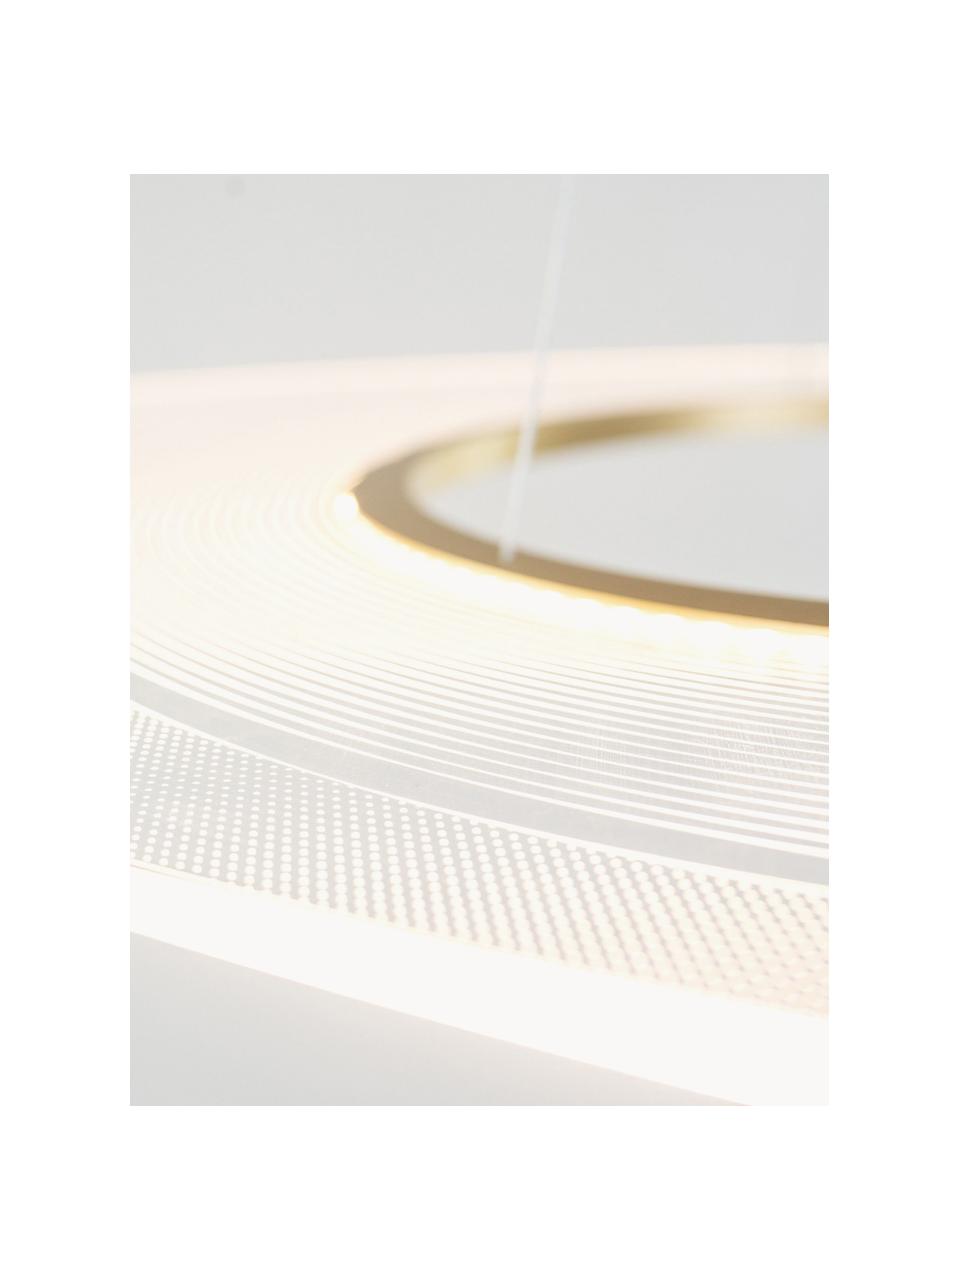 Grote LED hanglamp Eclipse, Transparant, goudkleurig, Ø 97 cm